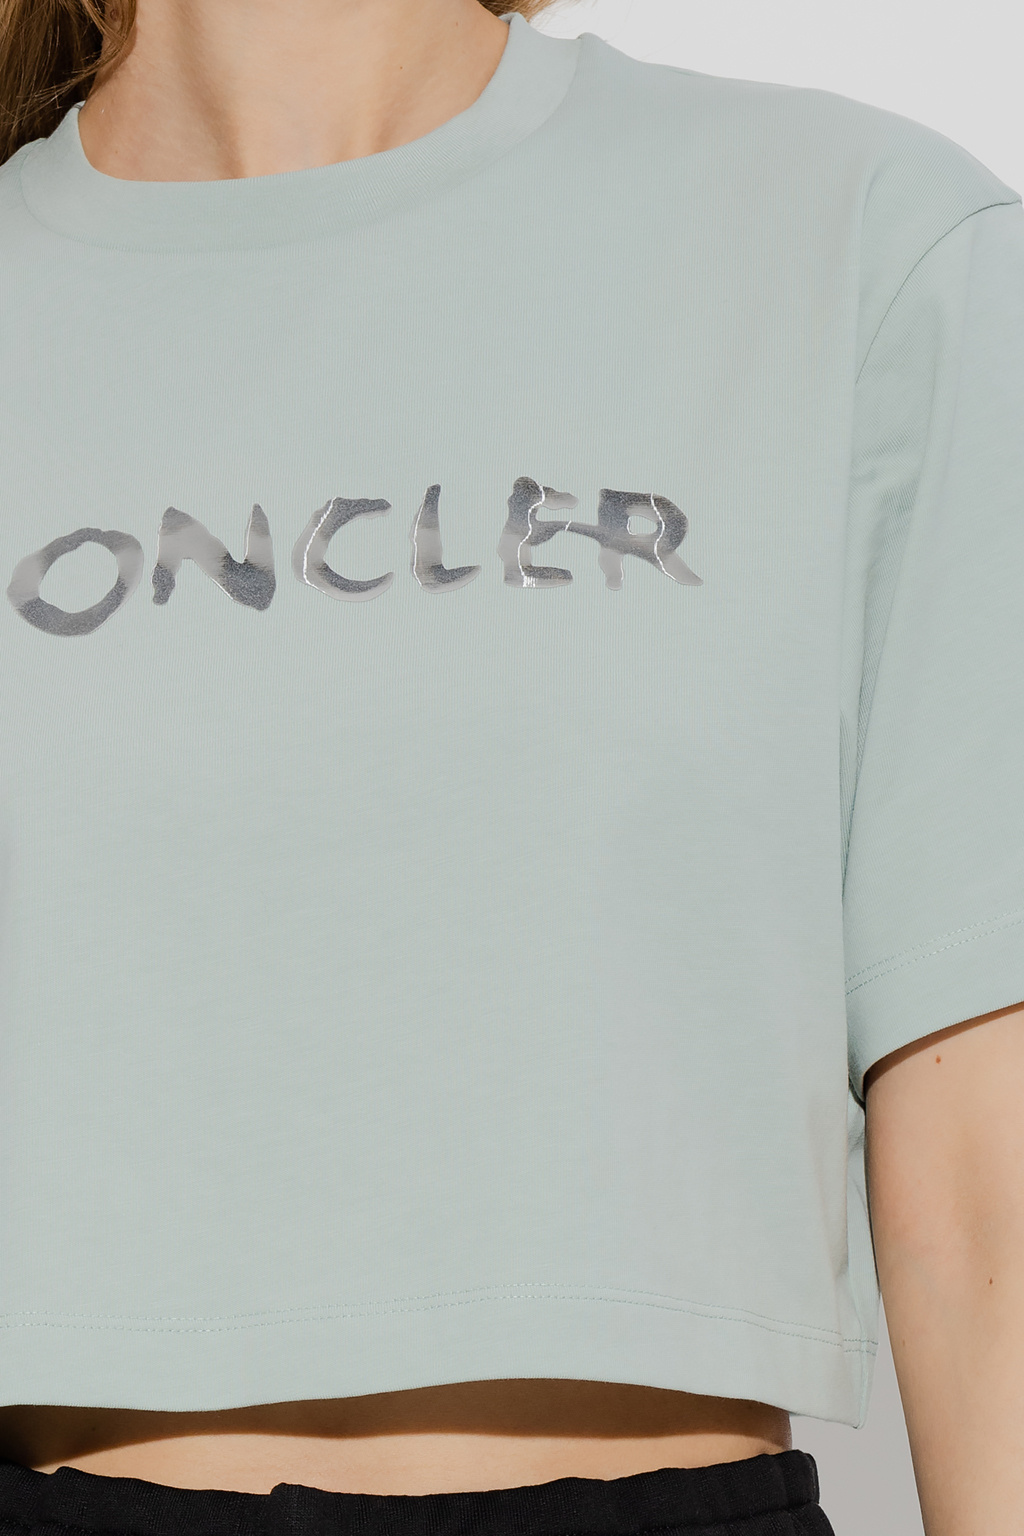 Moncler Cropped T-shirt MARGIELA with logo